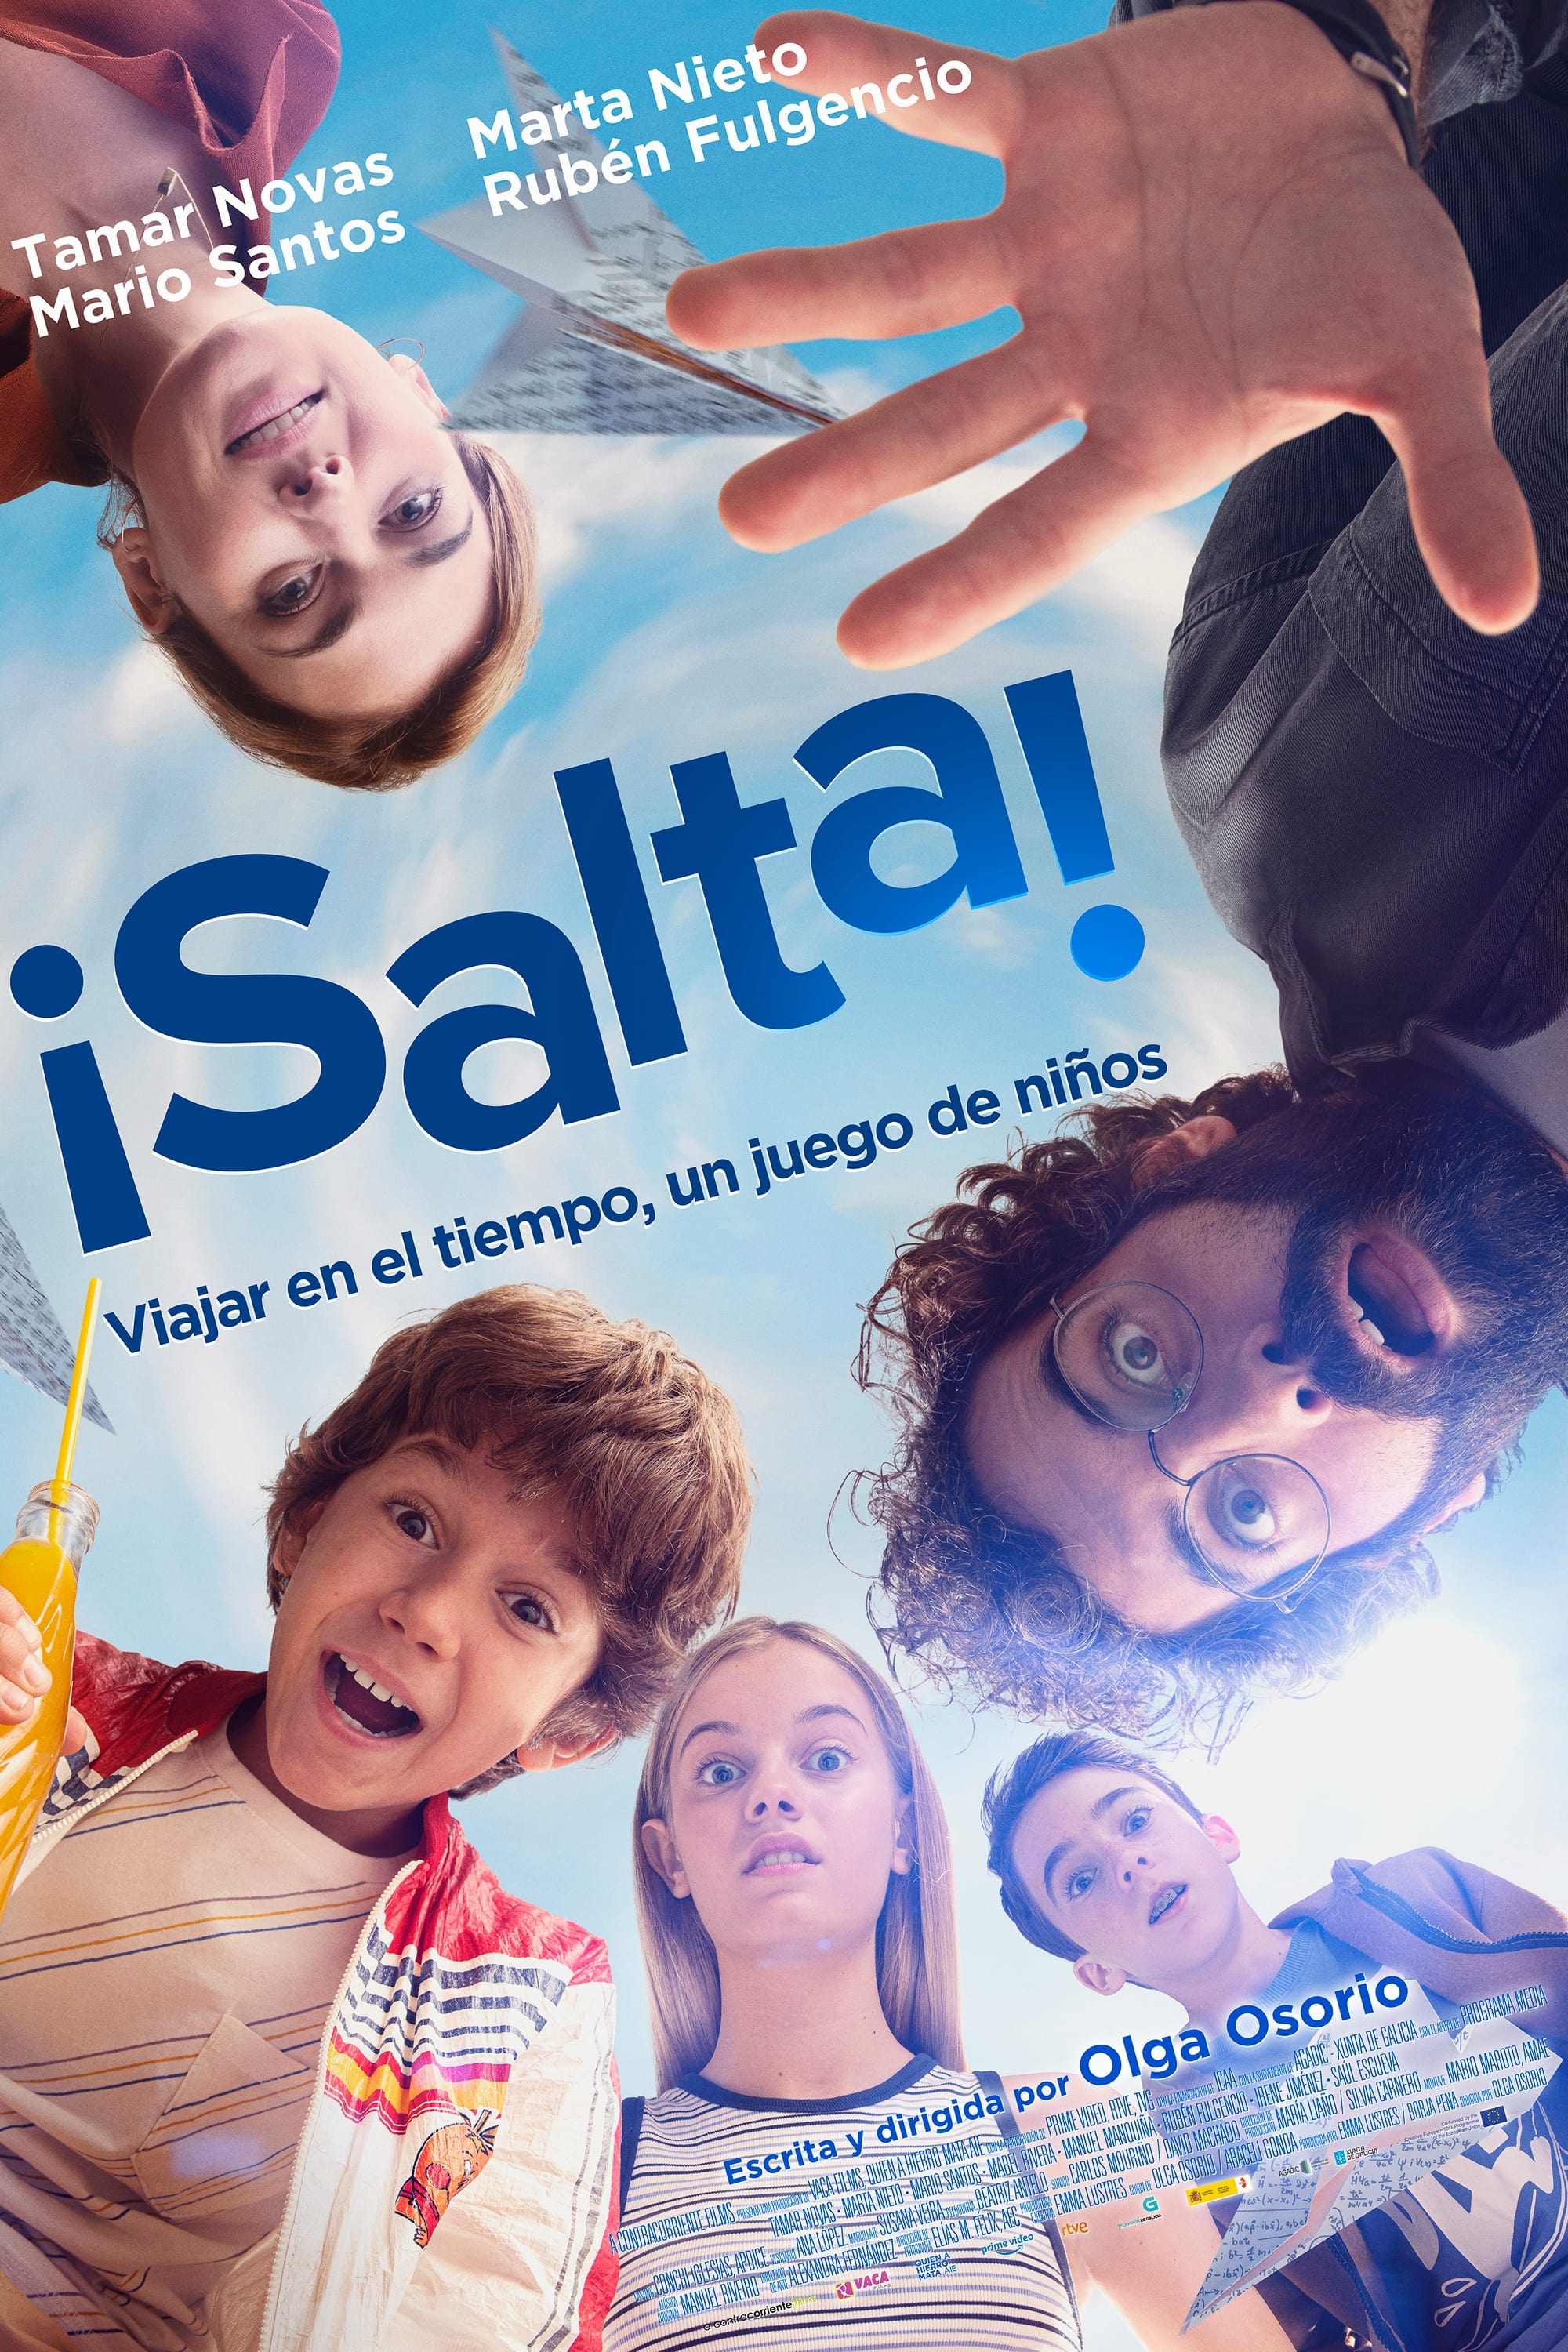 ¡Salta! Movie Review